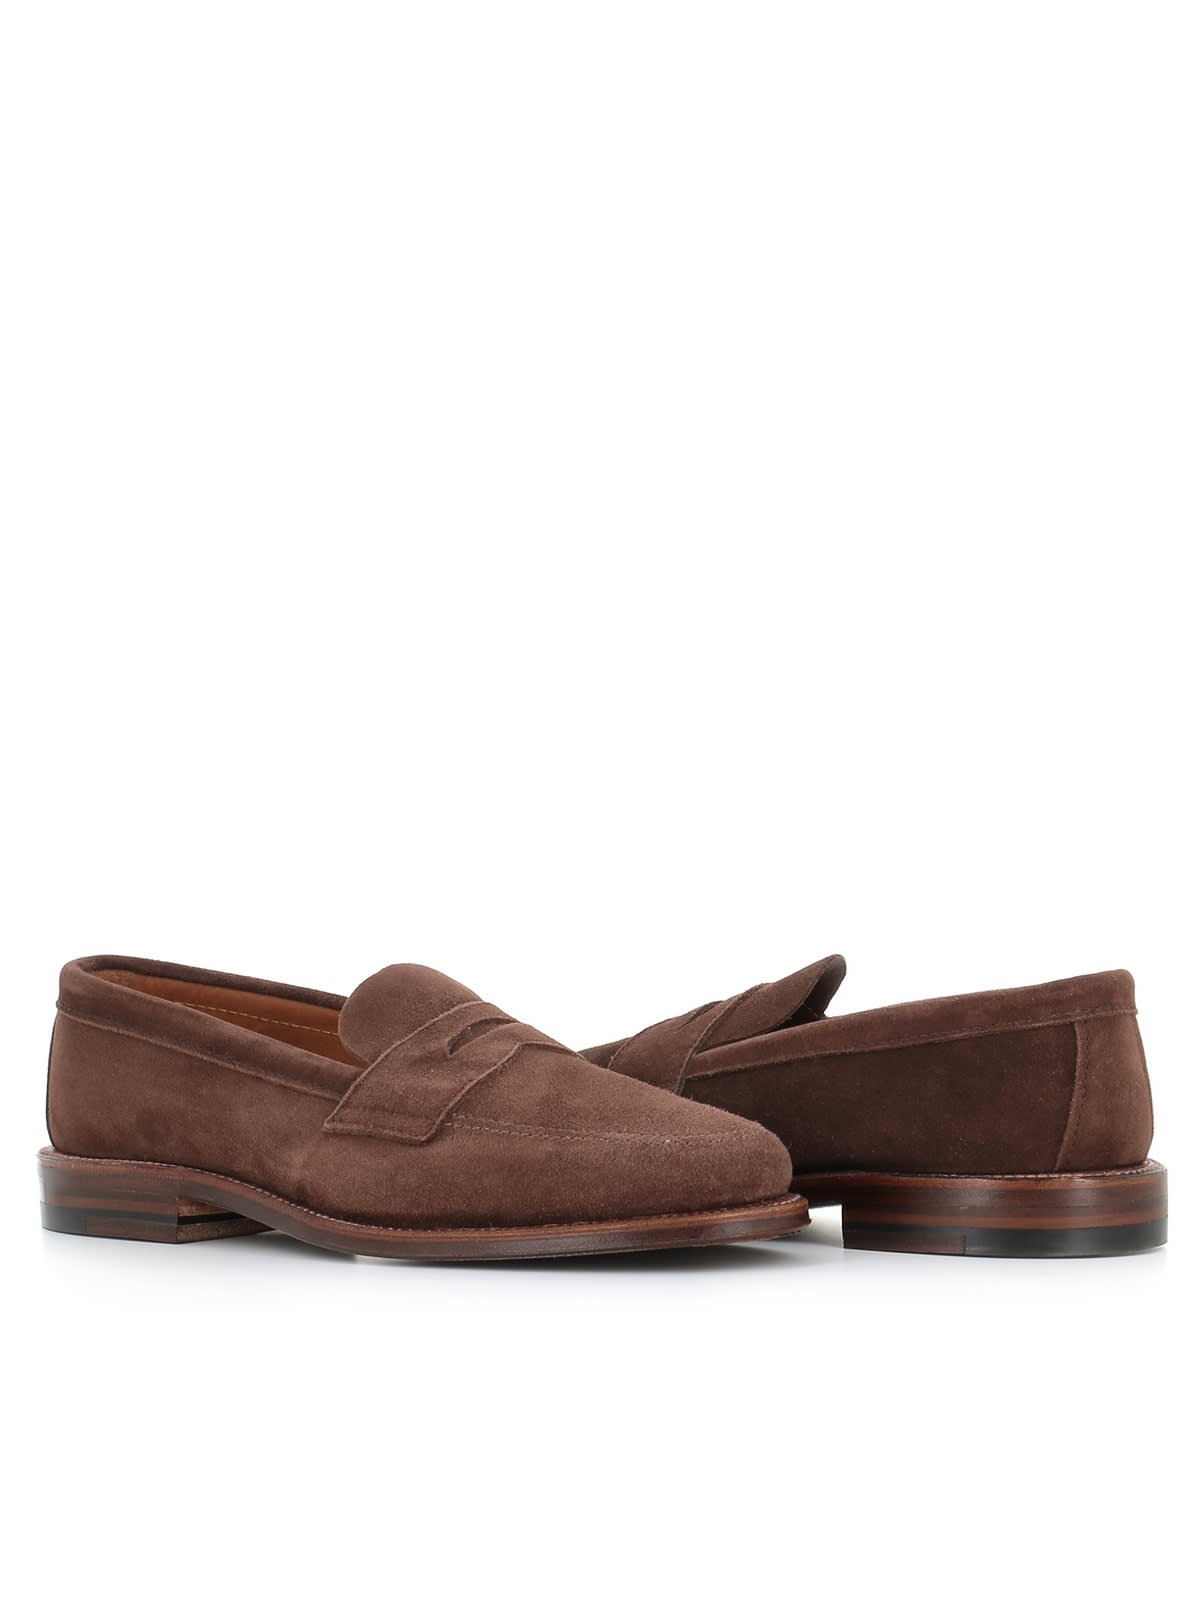 Alden Shoe Company Loafer 5736f In Brown